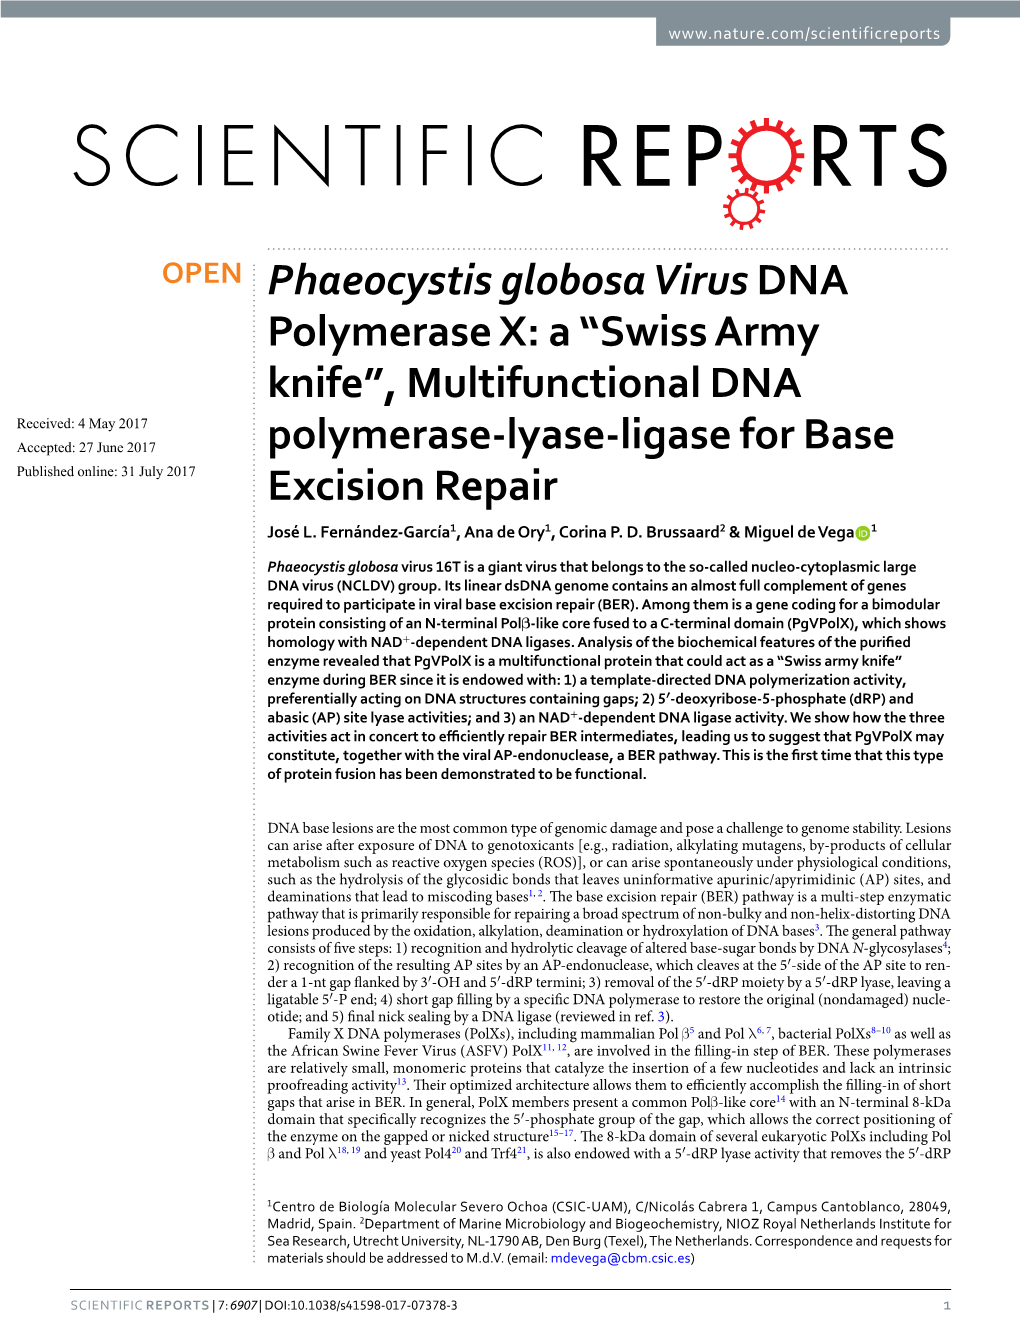 Phaeocystis Globosa Virus DNA Polymerase X: a “Swiss Army Knife